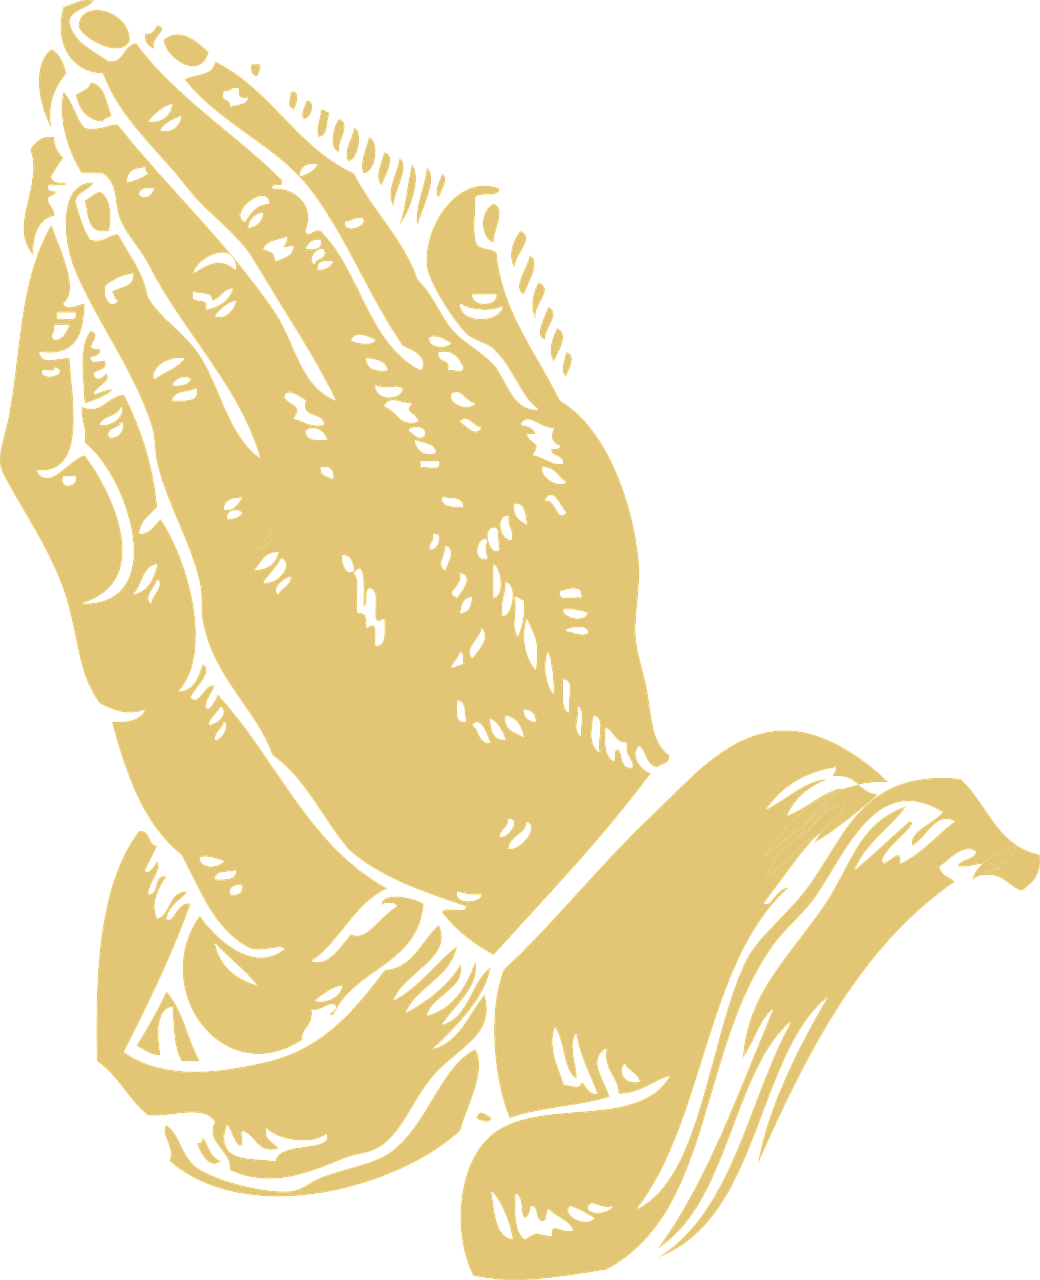 Folded Hands Praying Pray PNG.